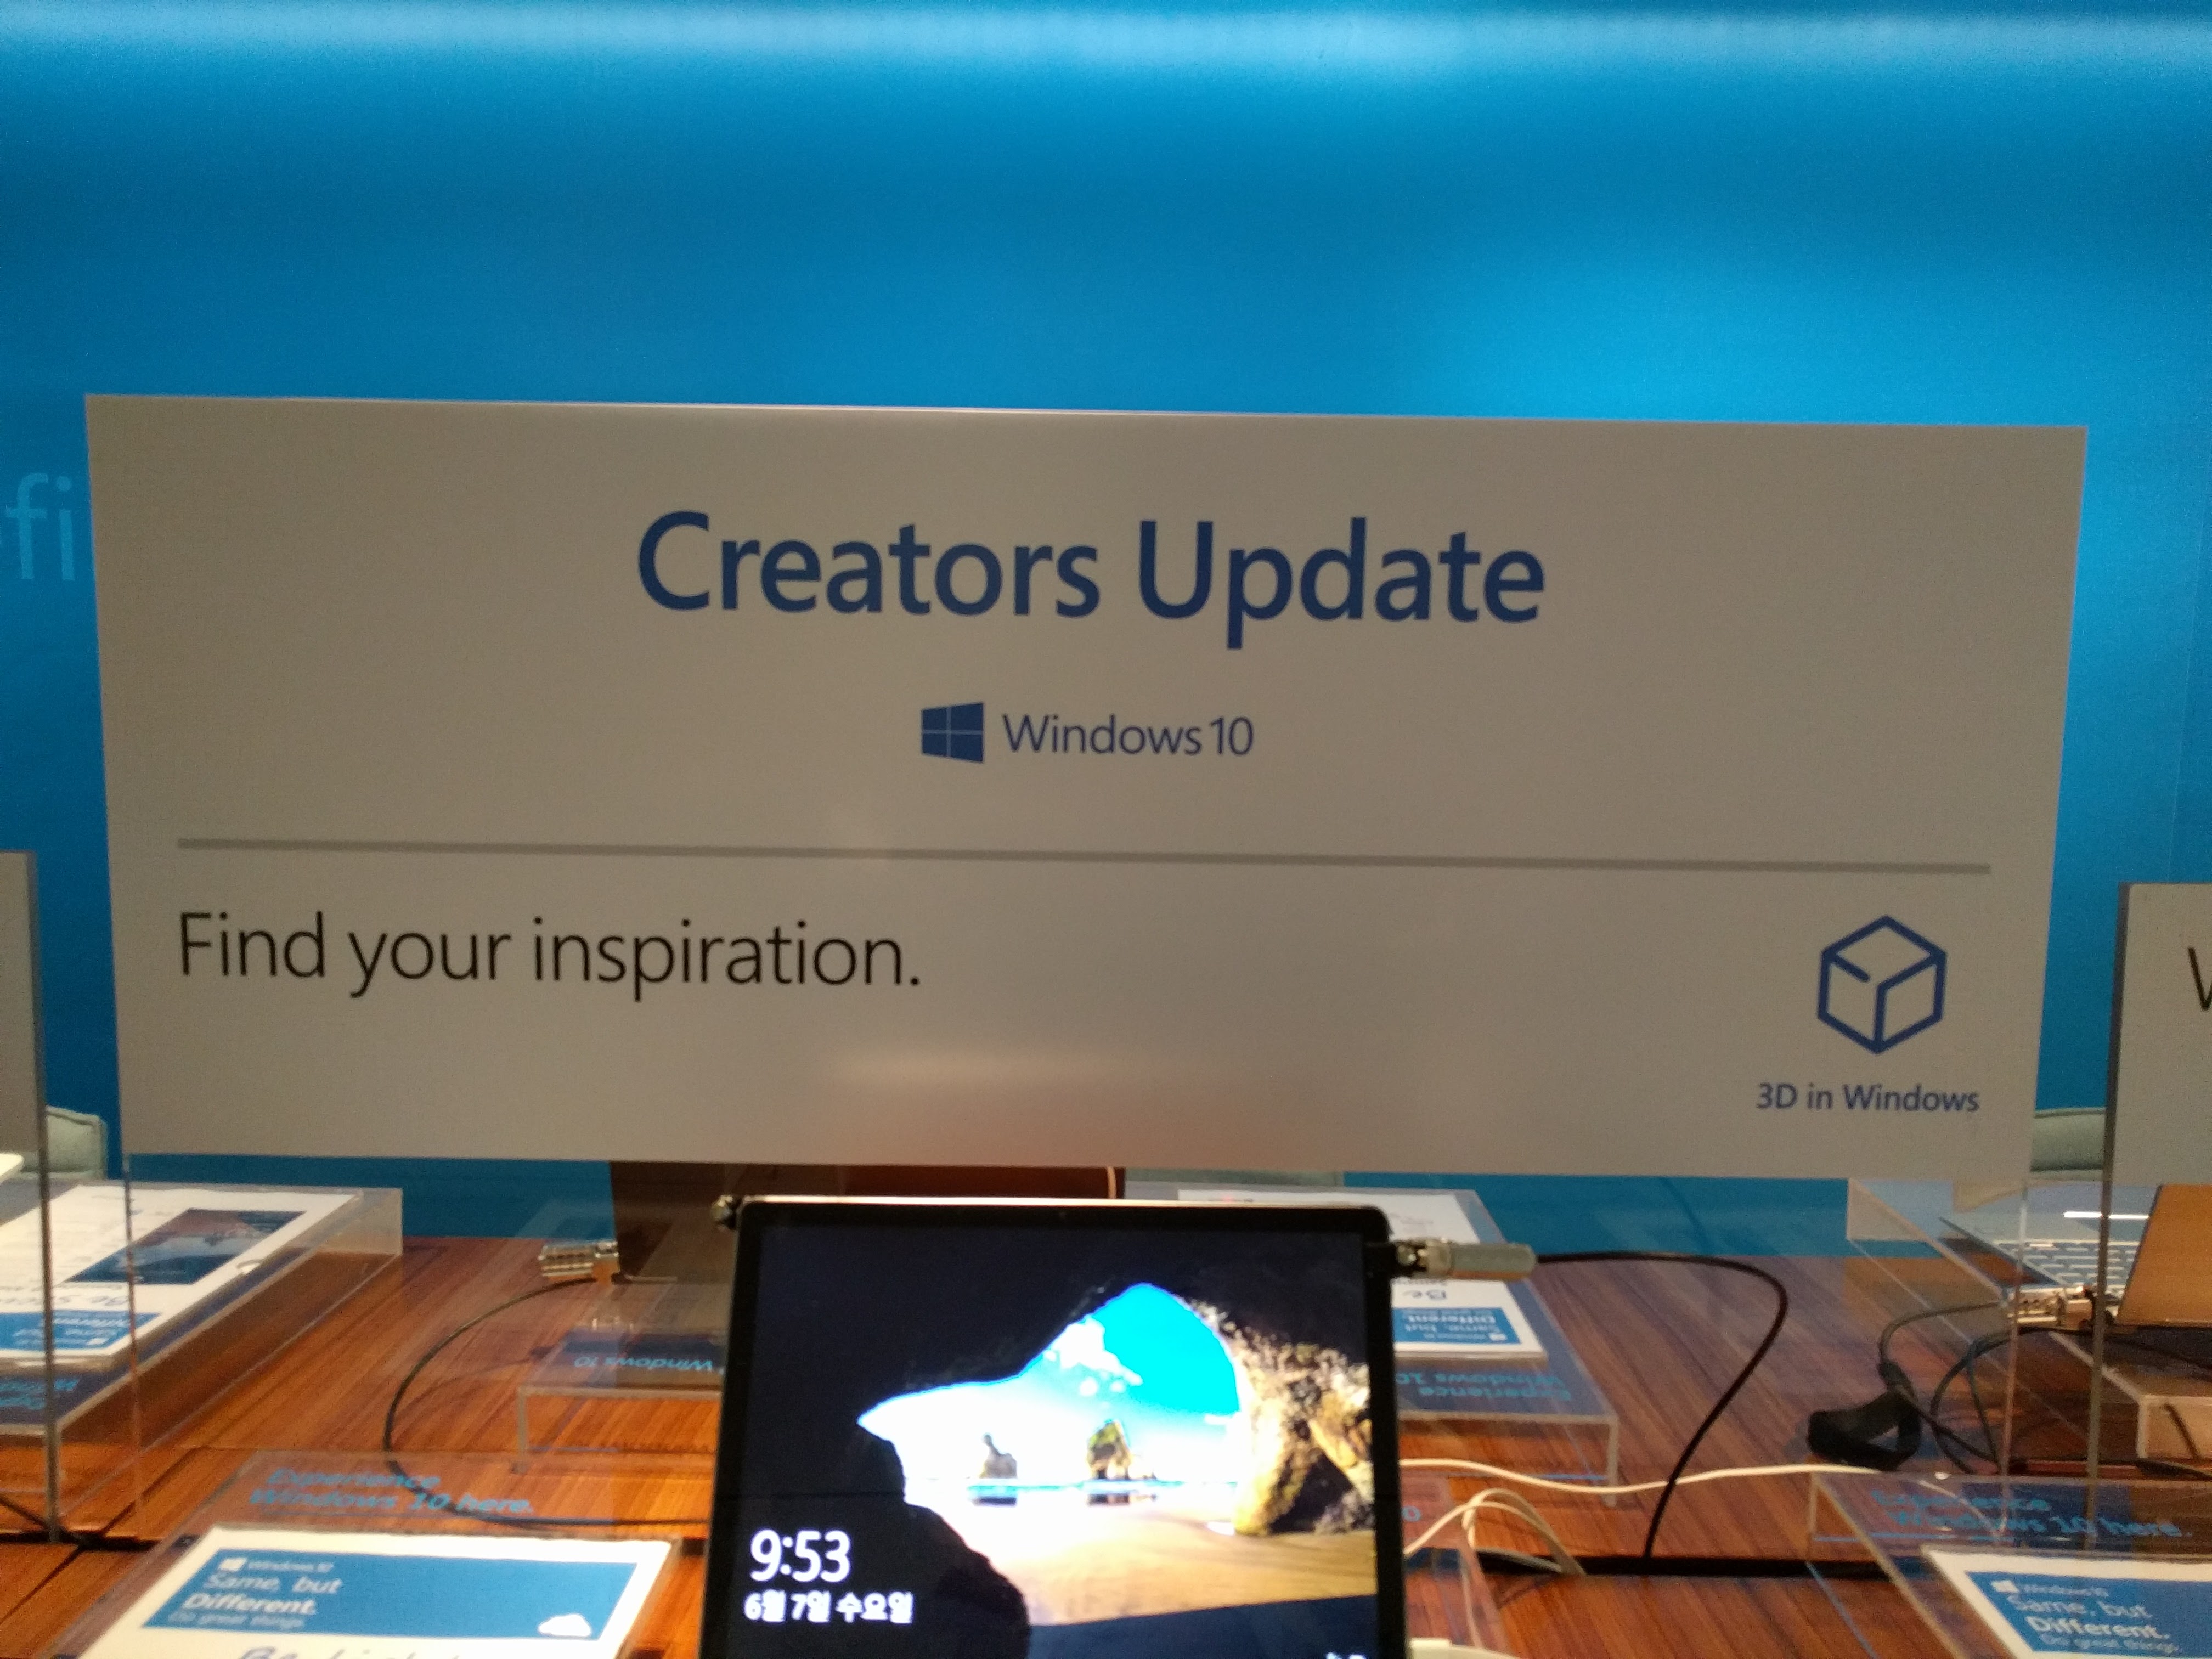 Windows 10 Creators Update Display at Level 11